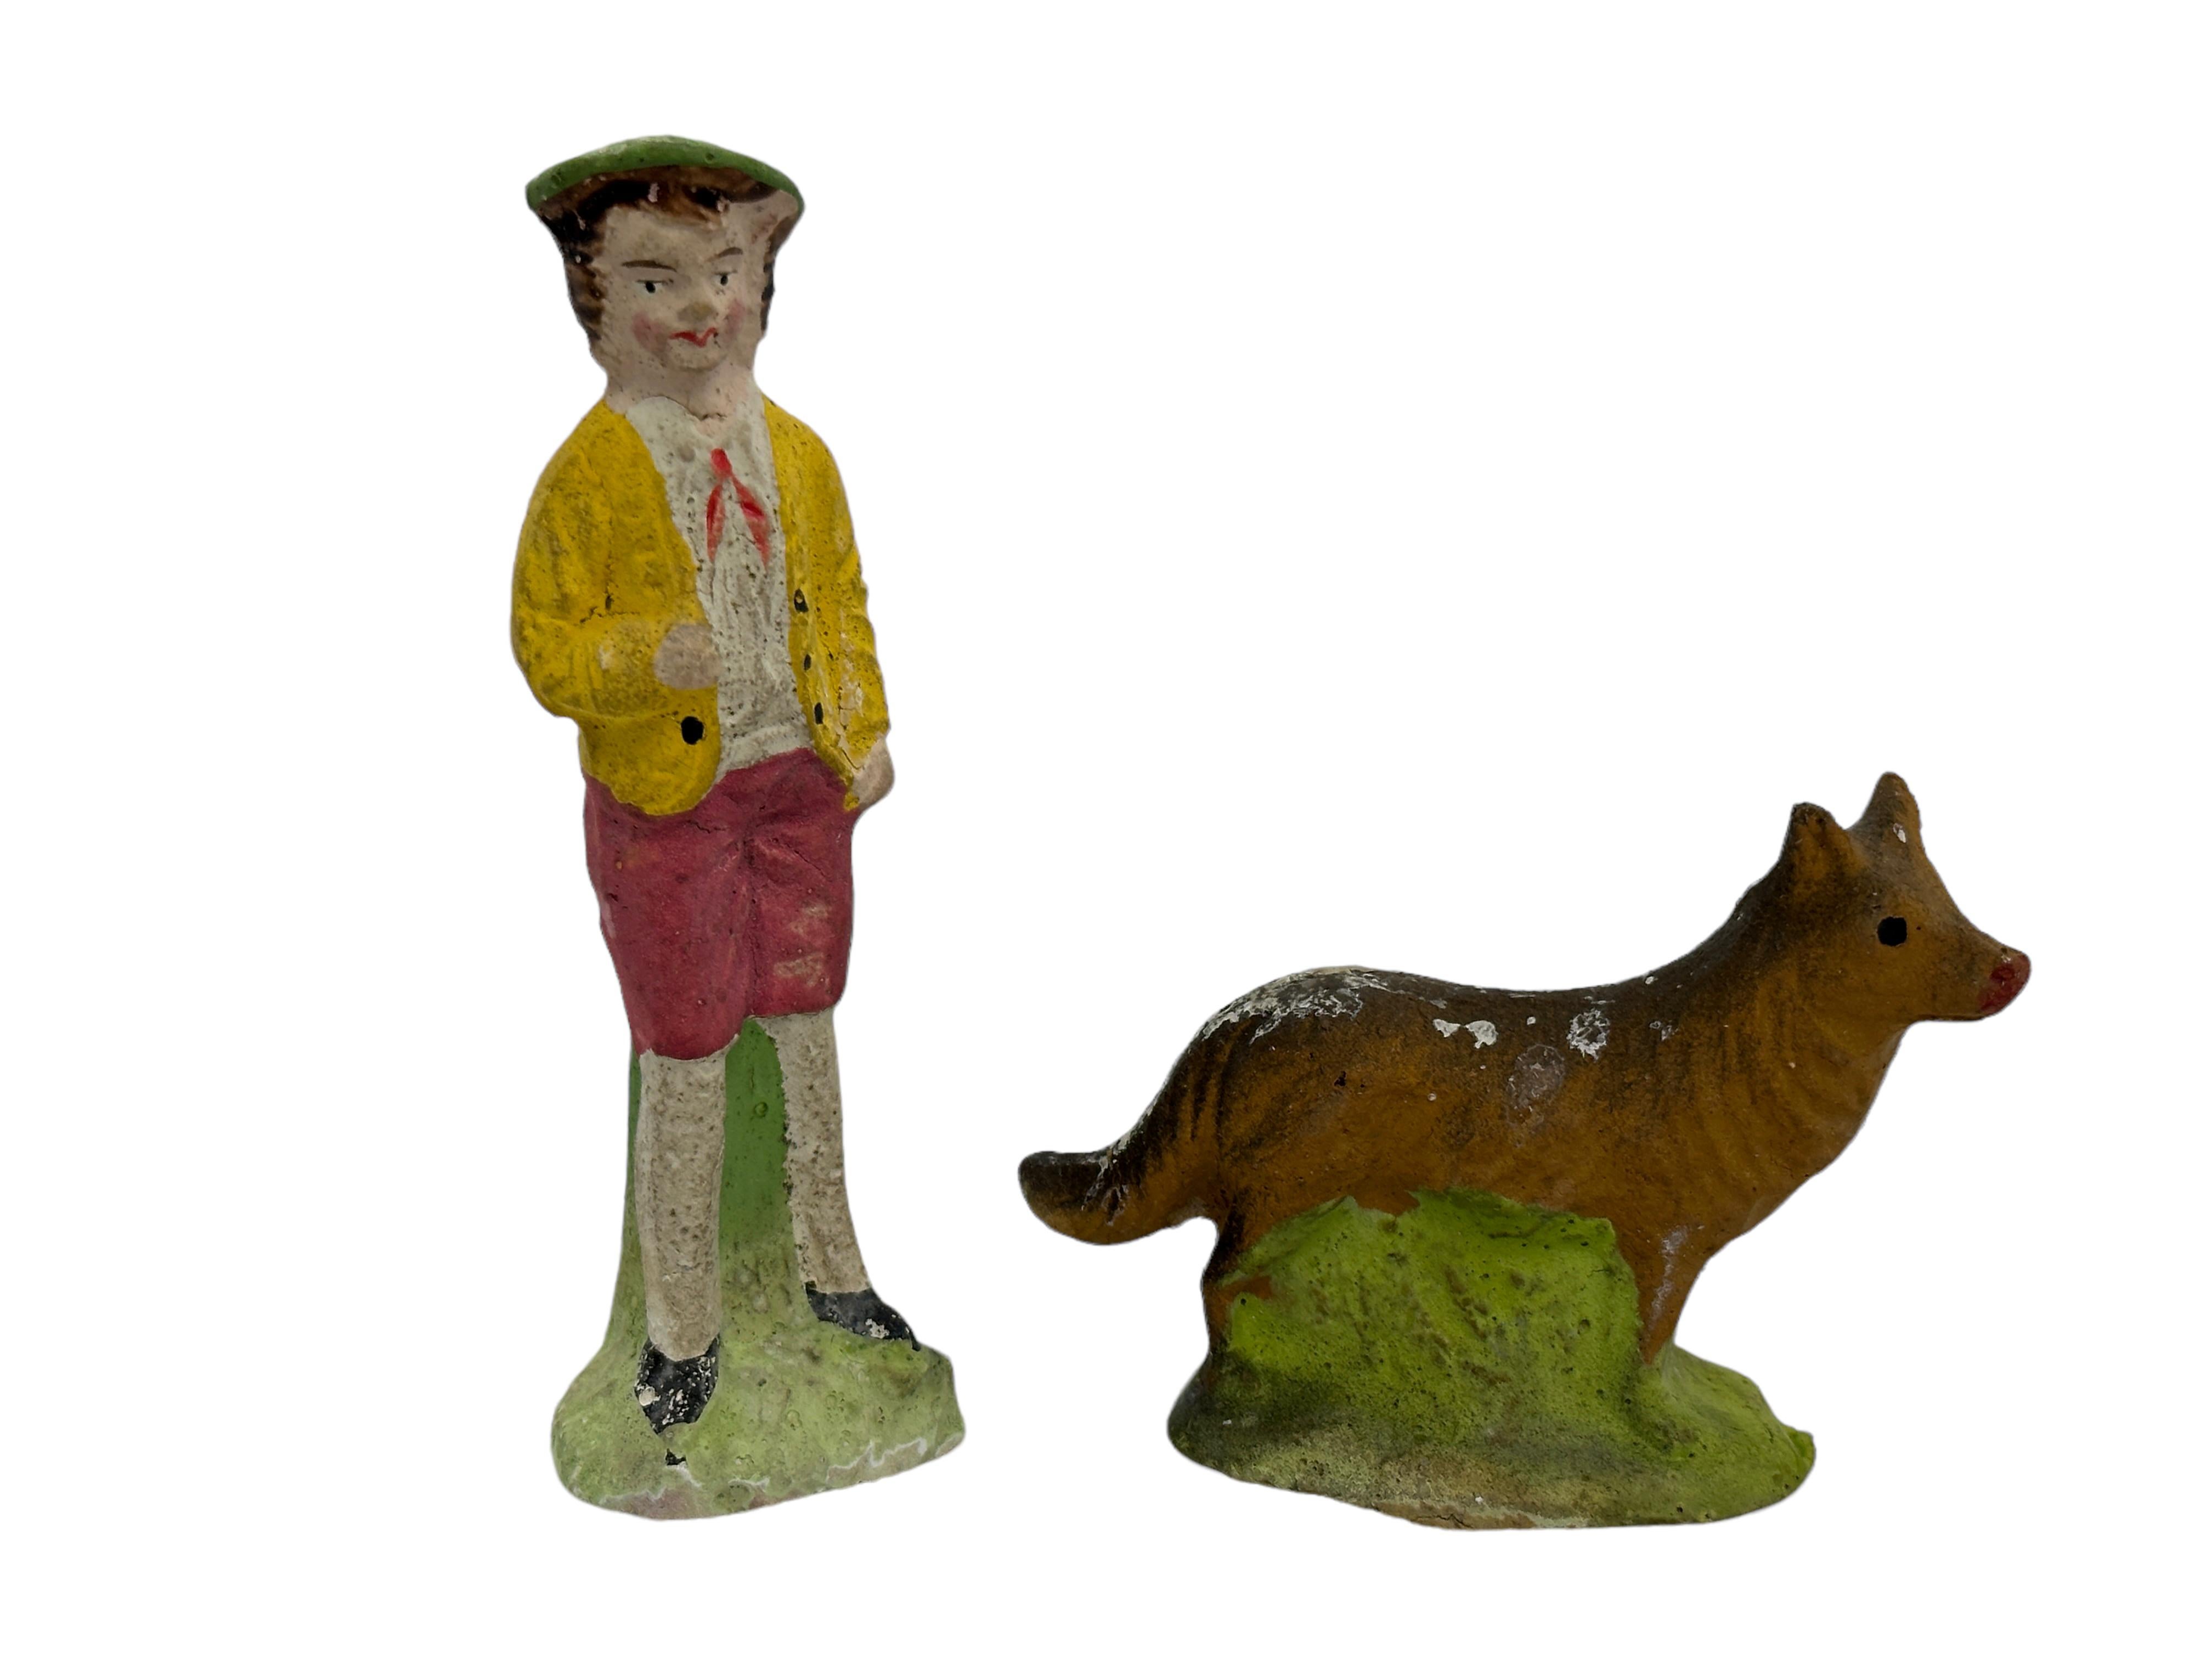 Composition Shepherd & Wooly Sheep Putz Toy Set Antique German Christmas 1900s, original Box For Sale